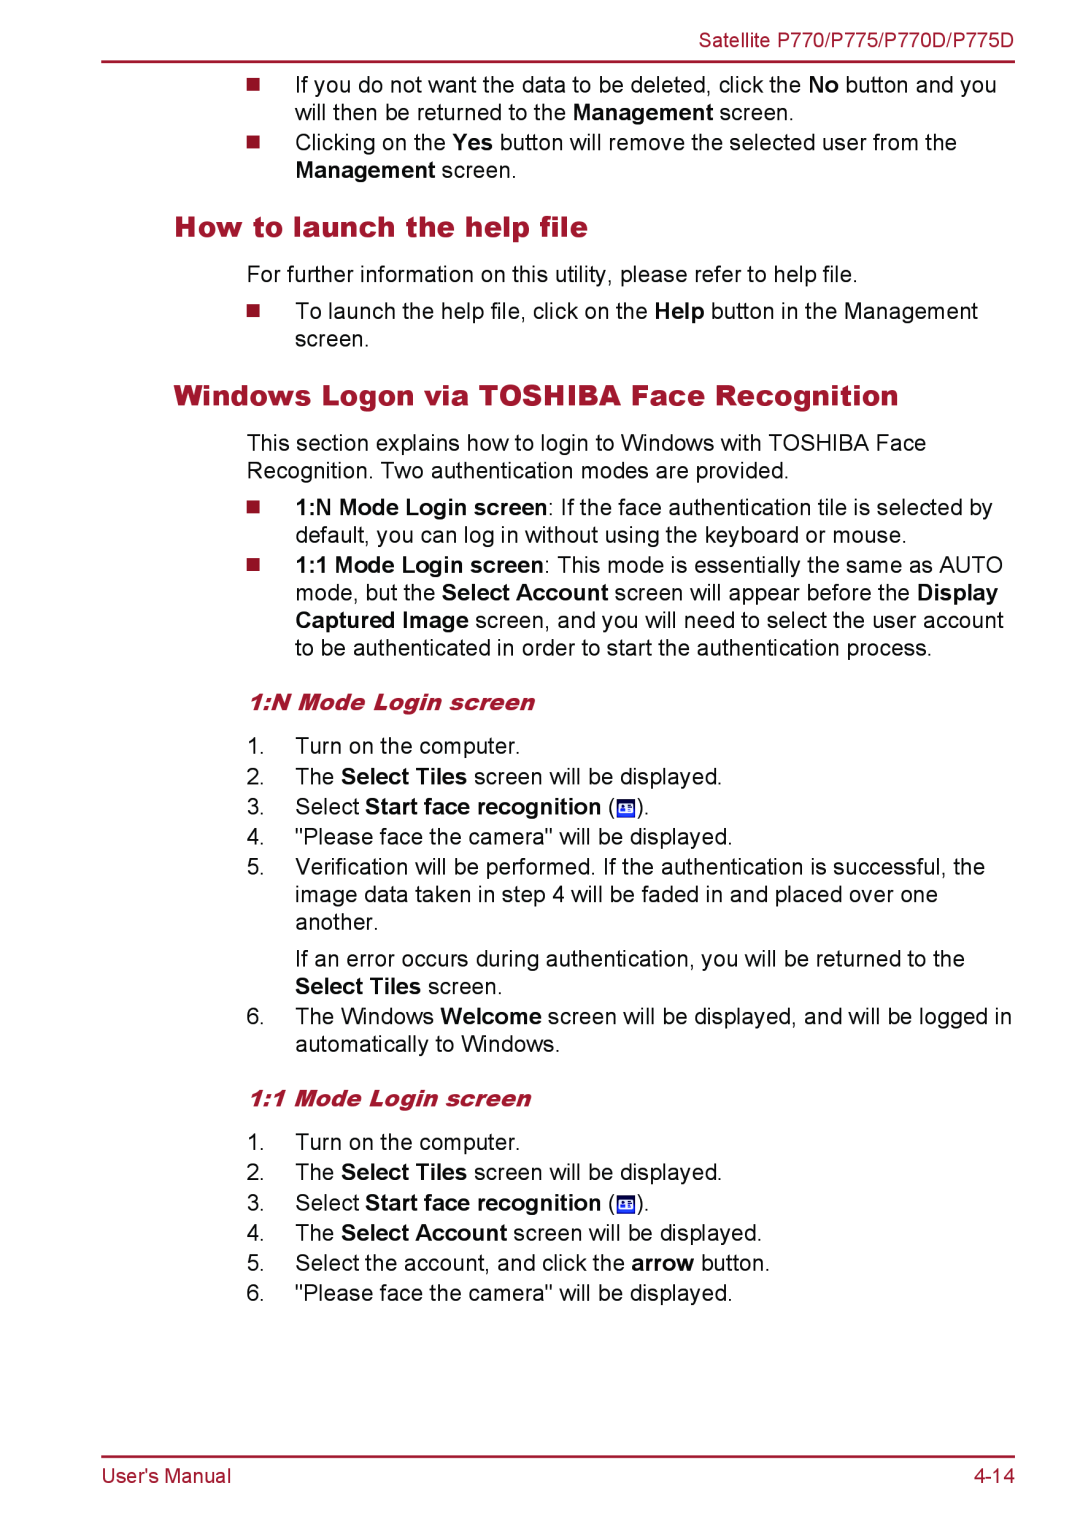 Toshiba P770 user manual How to launch the help file, Windows Logon via TOSHIBA Face Recognition, 1N Mode Login screen 